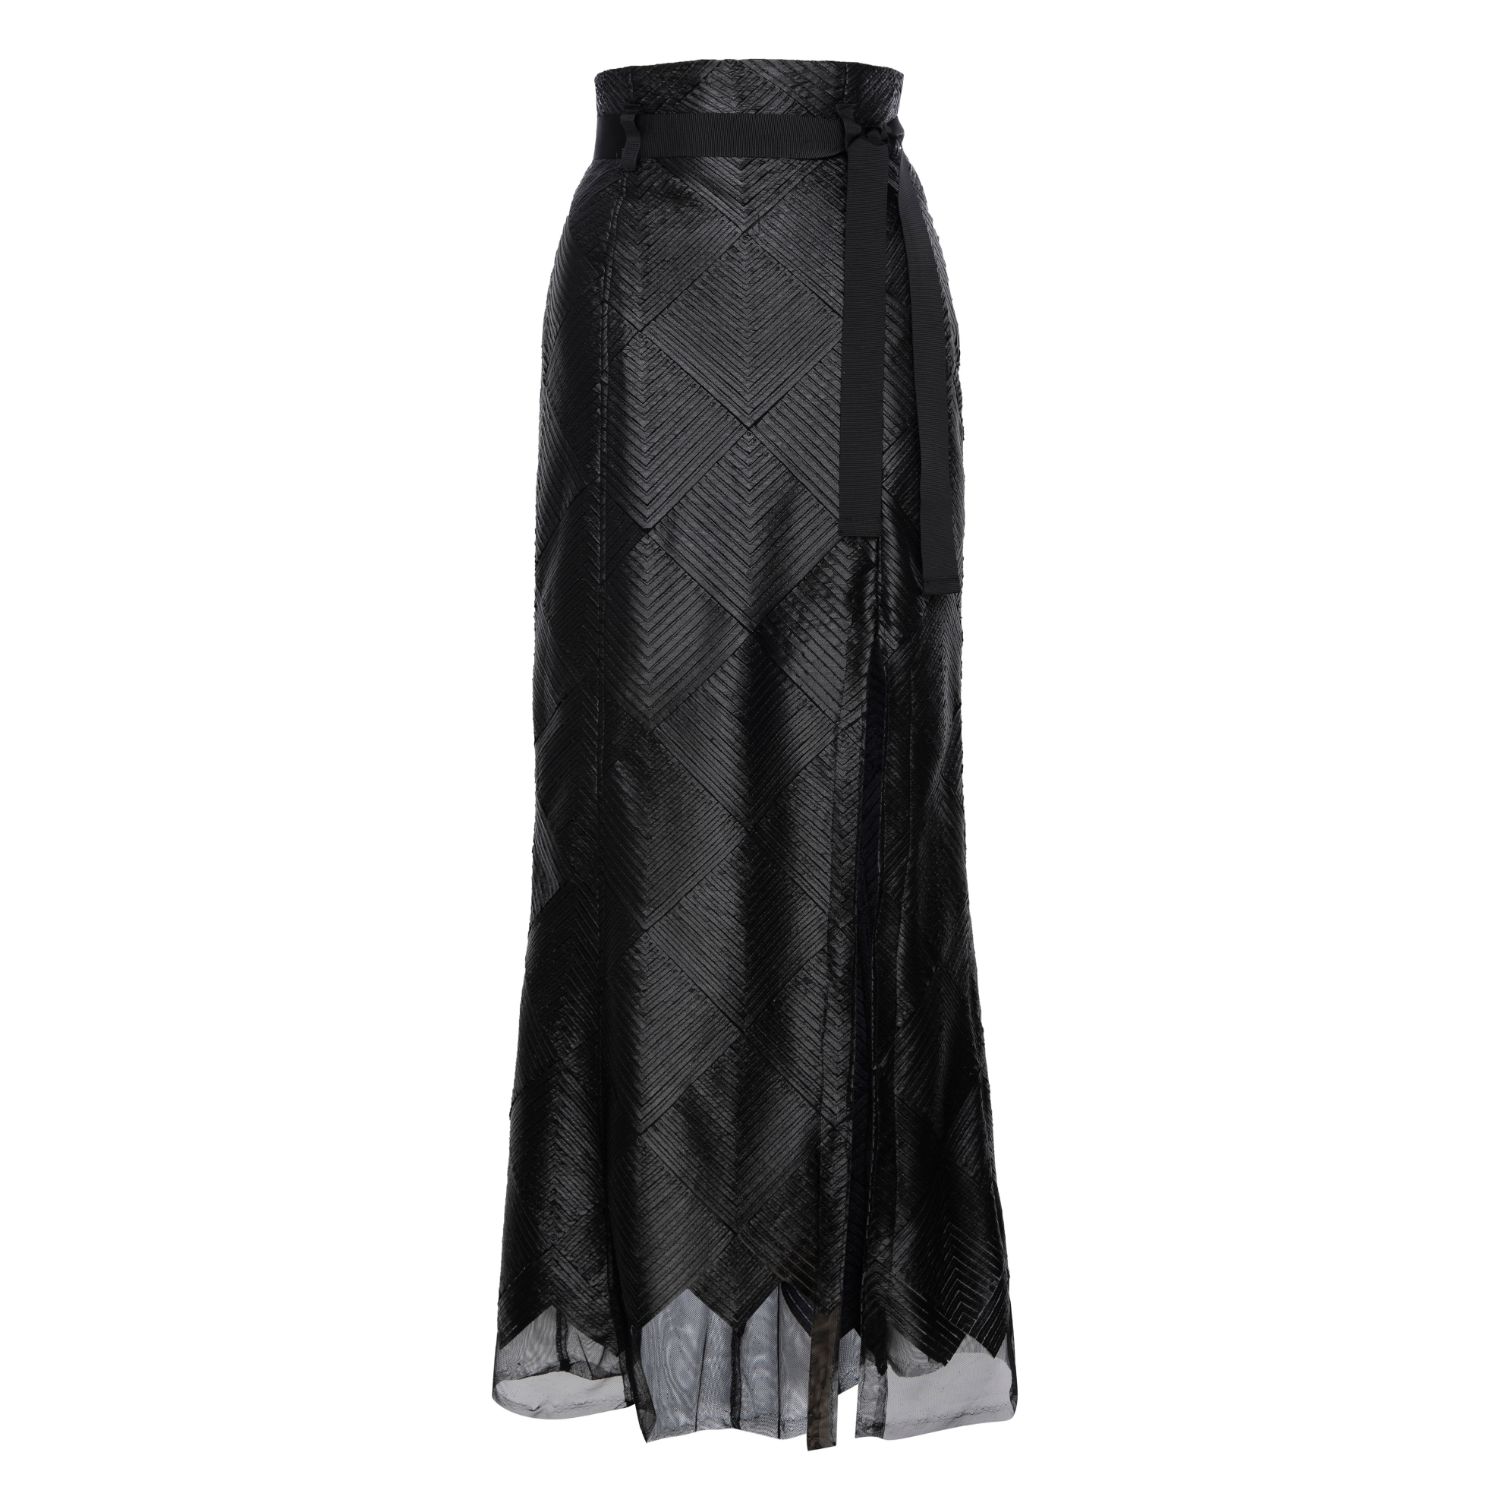 Lahive Women's Black Peyton Leather Like Skirt